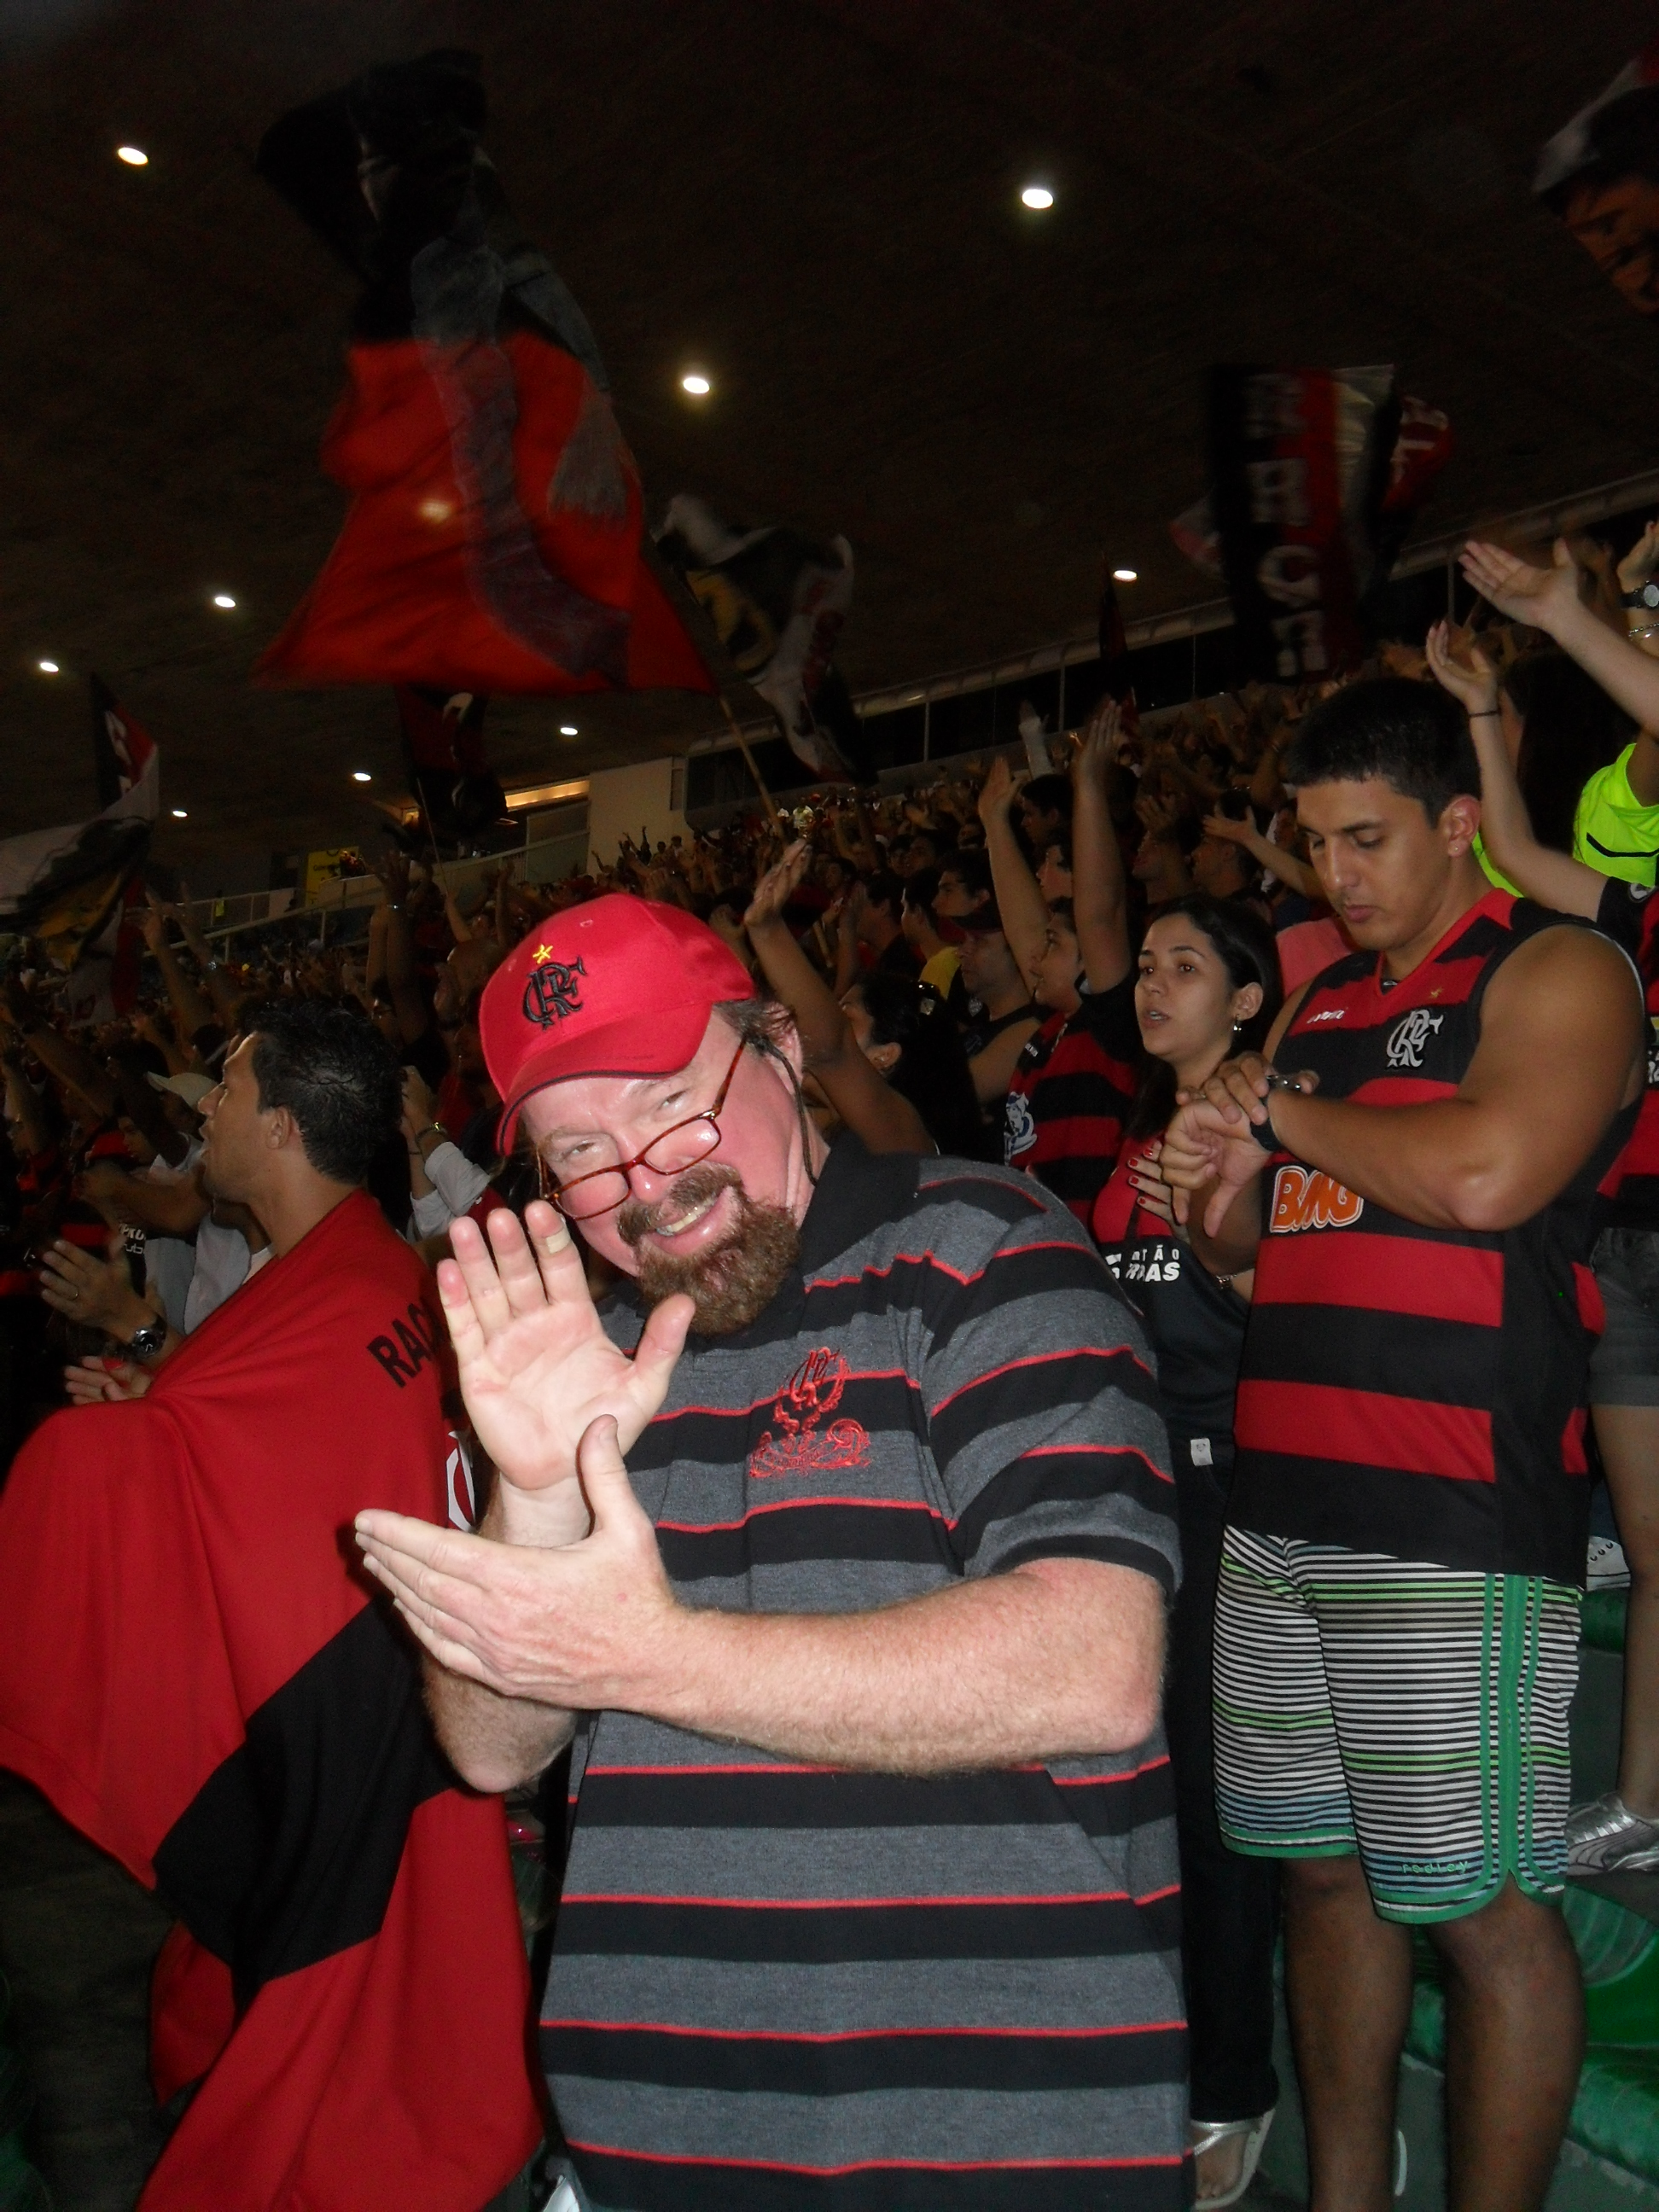 FlamengoJohn2.JPG